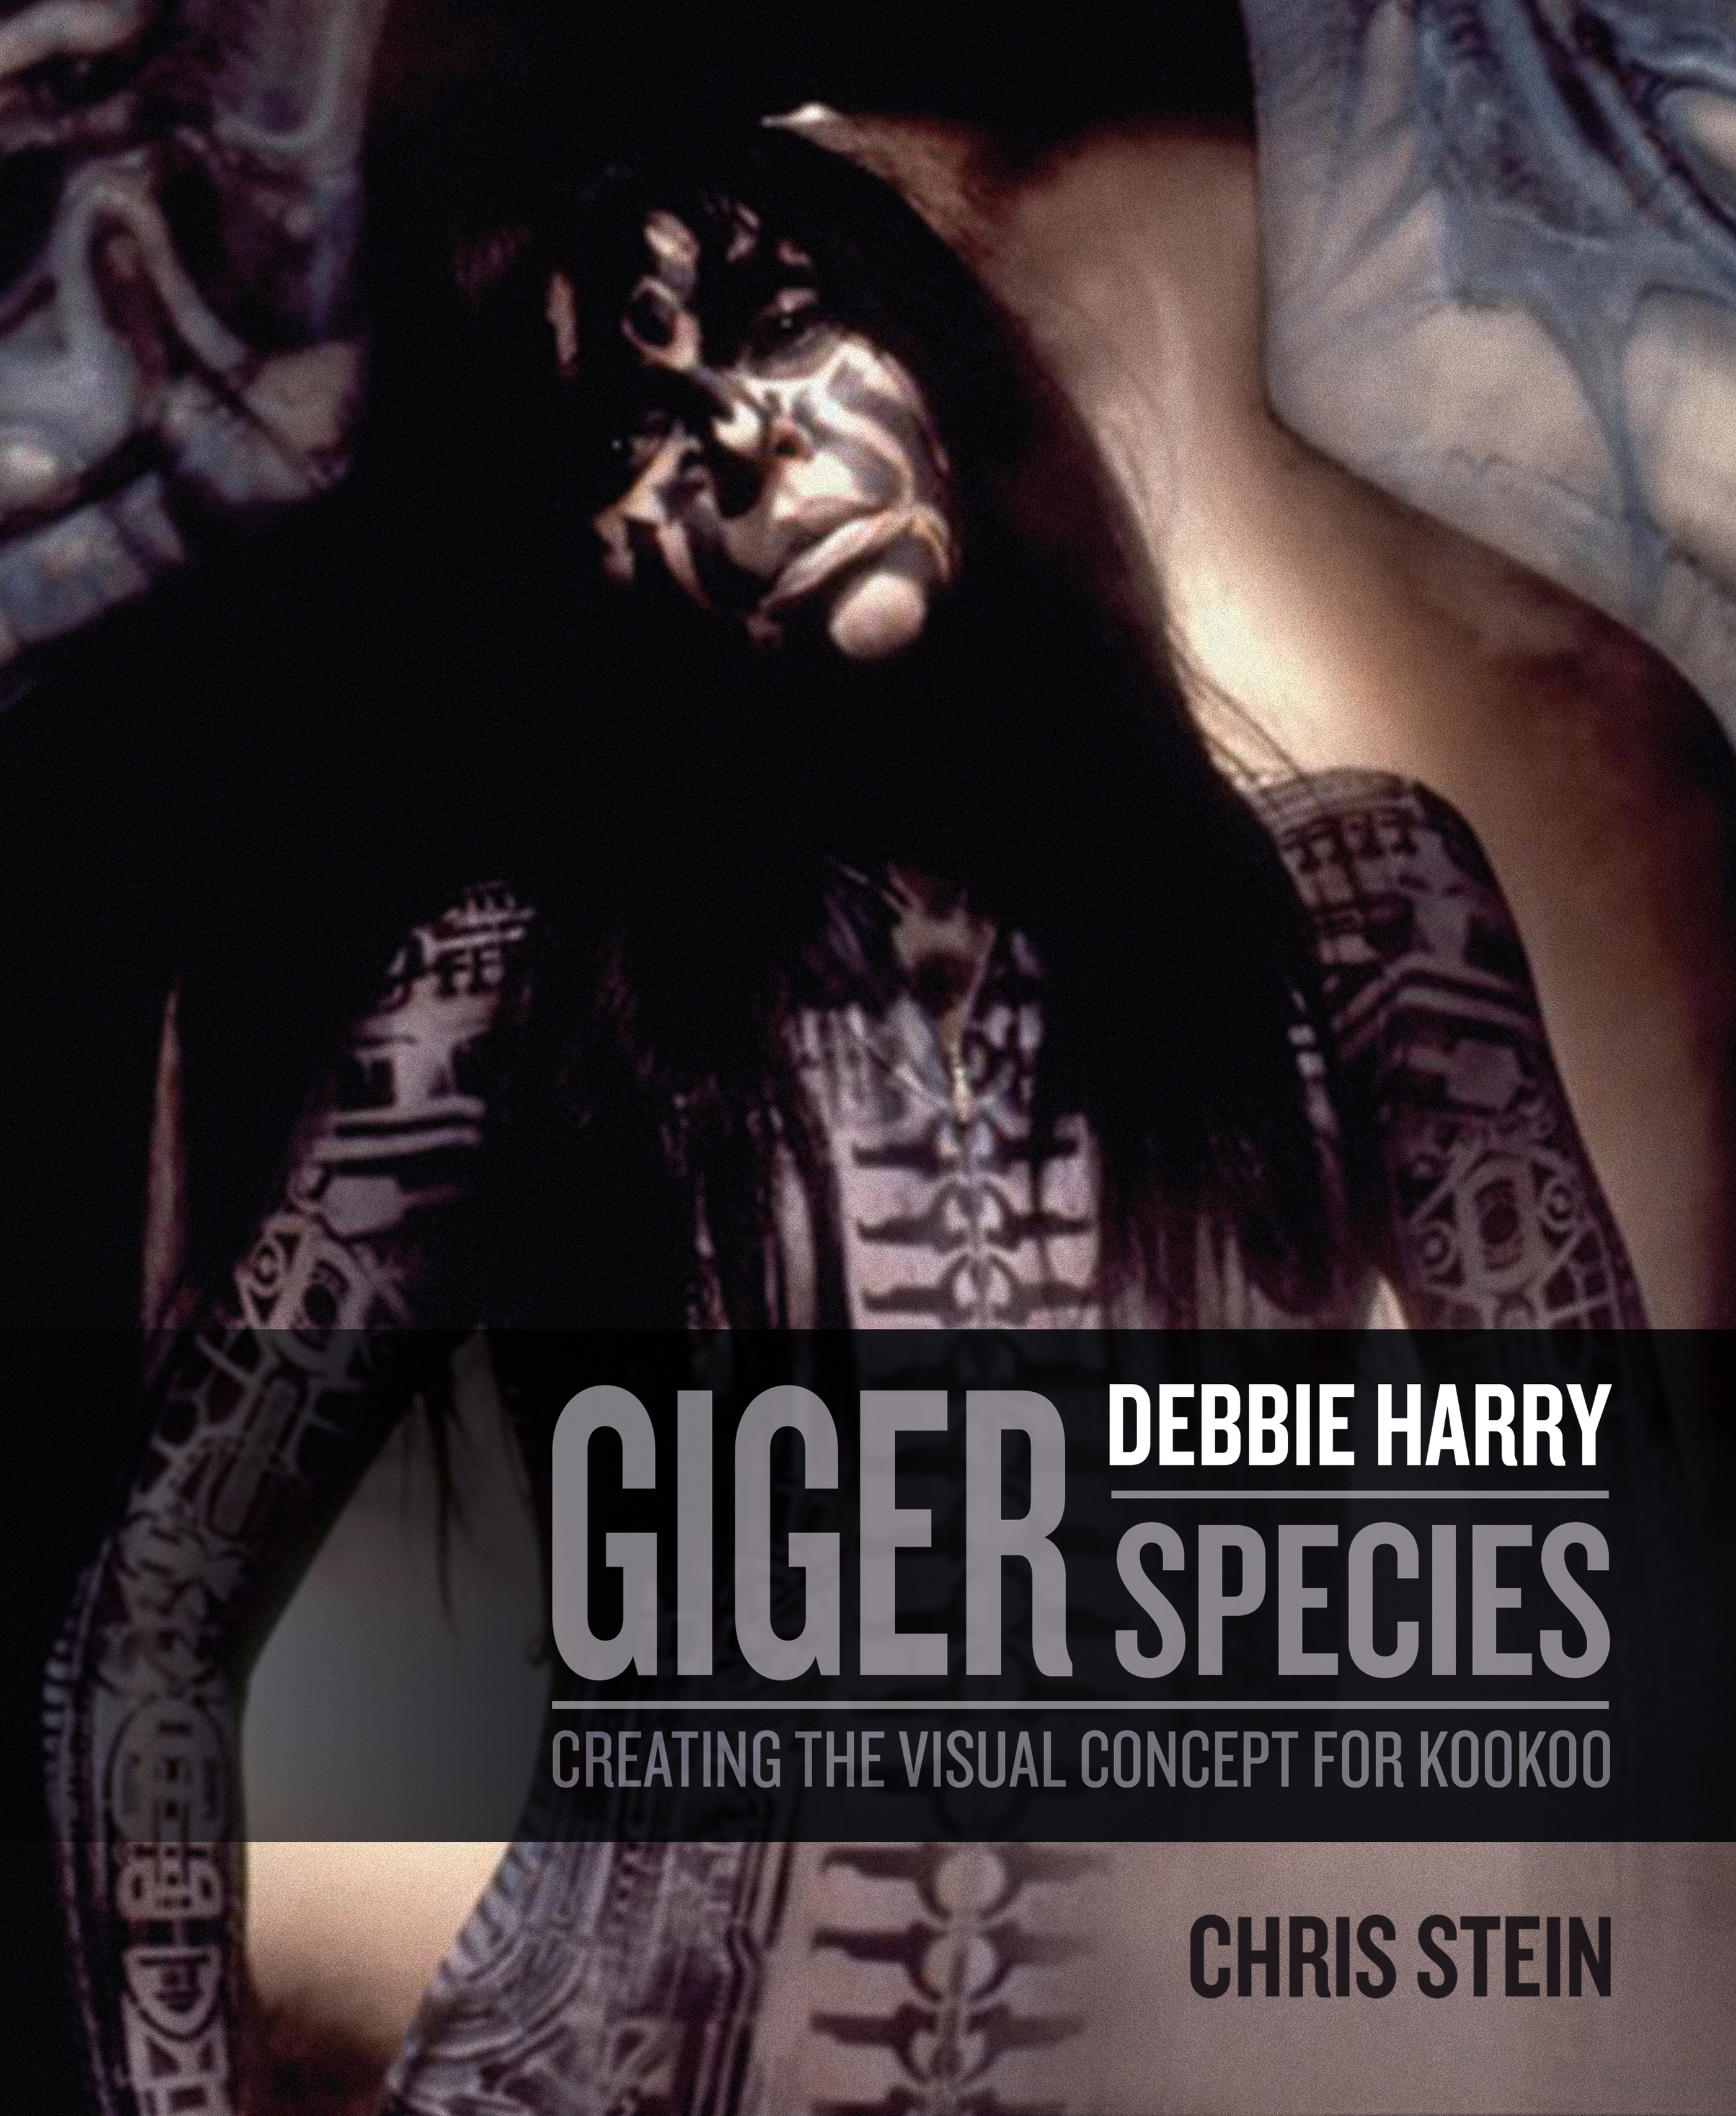 Giger Debbie Harry Species Hardcover